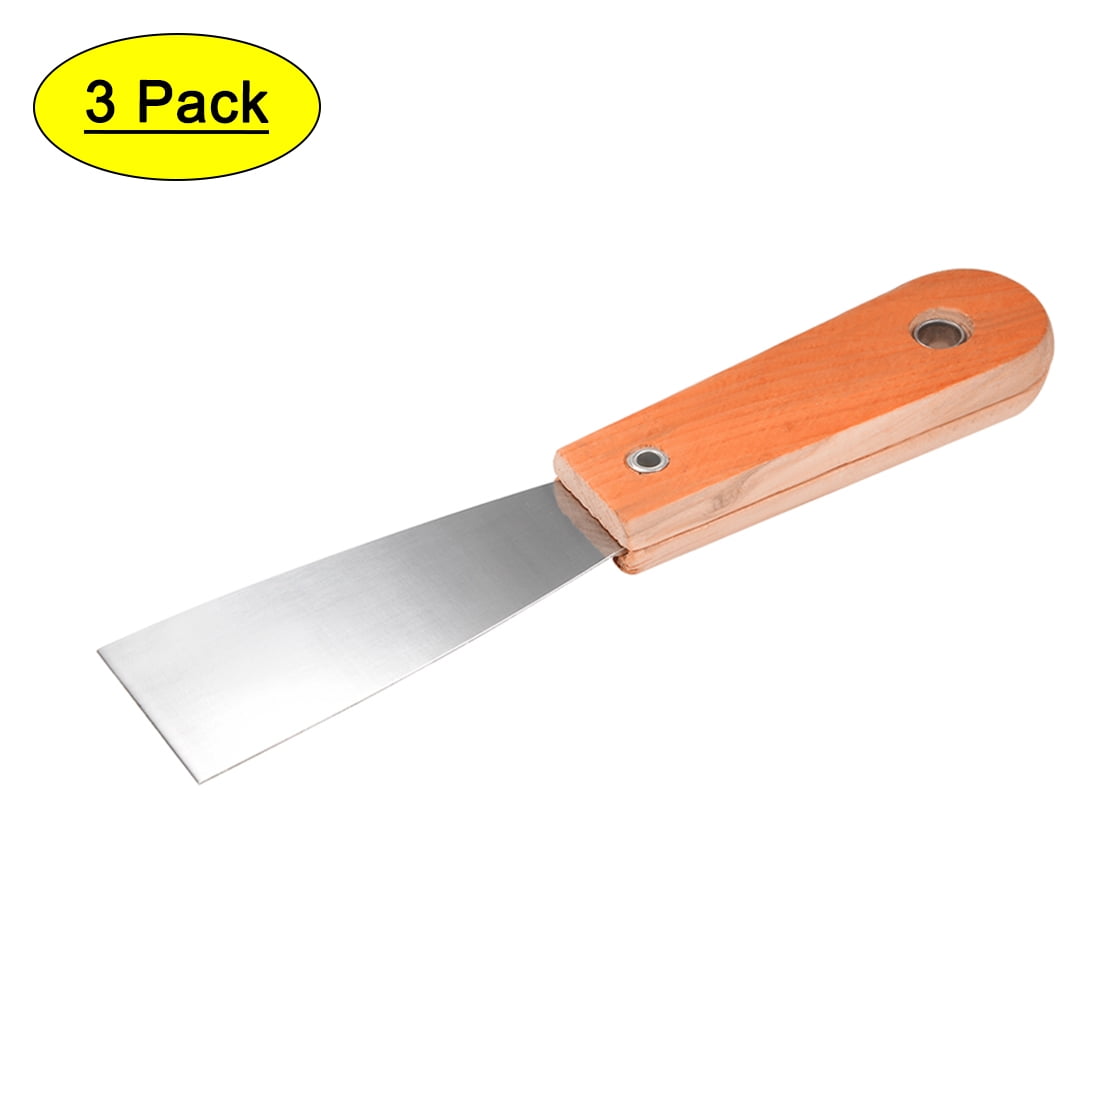 Paint Scraper - 1.5 Wide Blade - Black & Yellow Handle w/ Metal Scraper